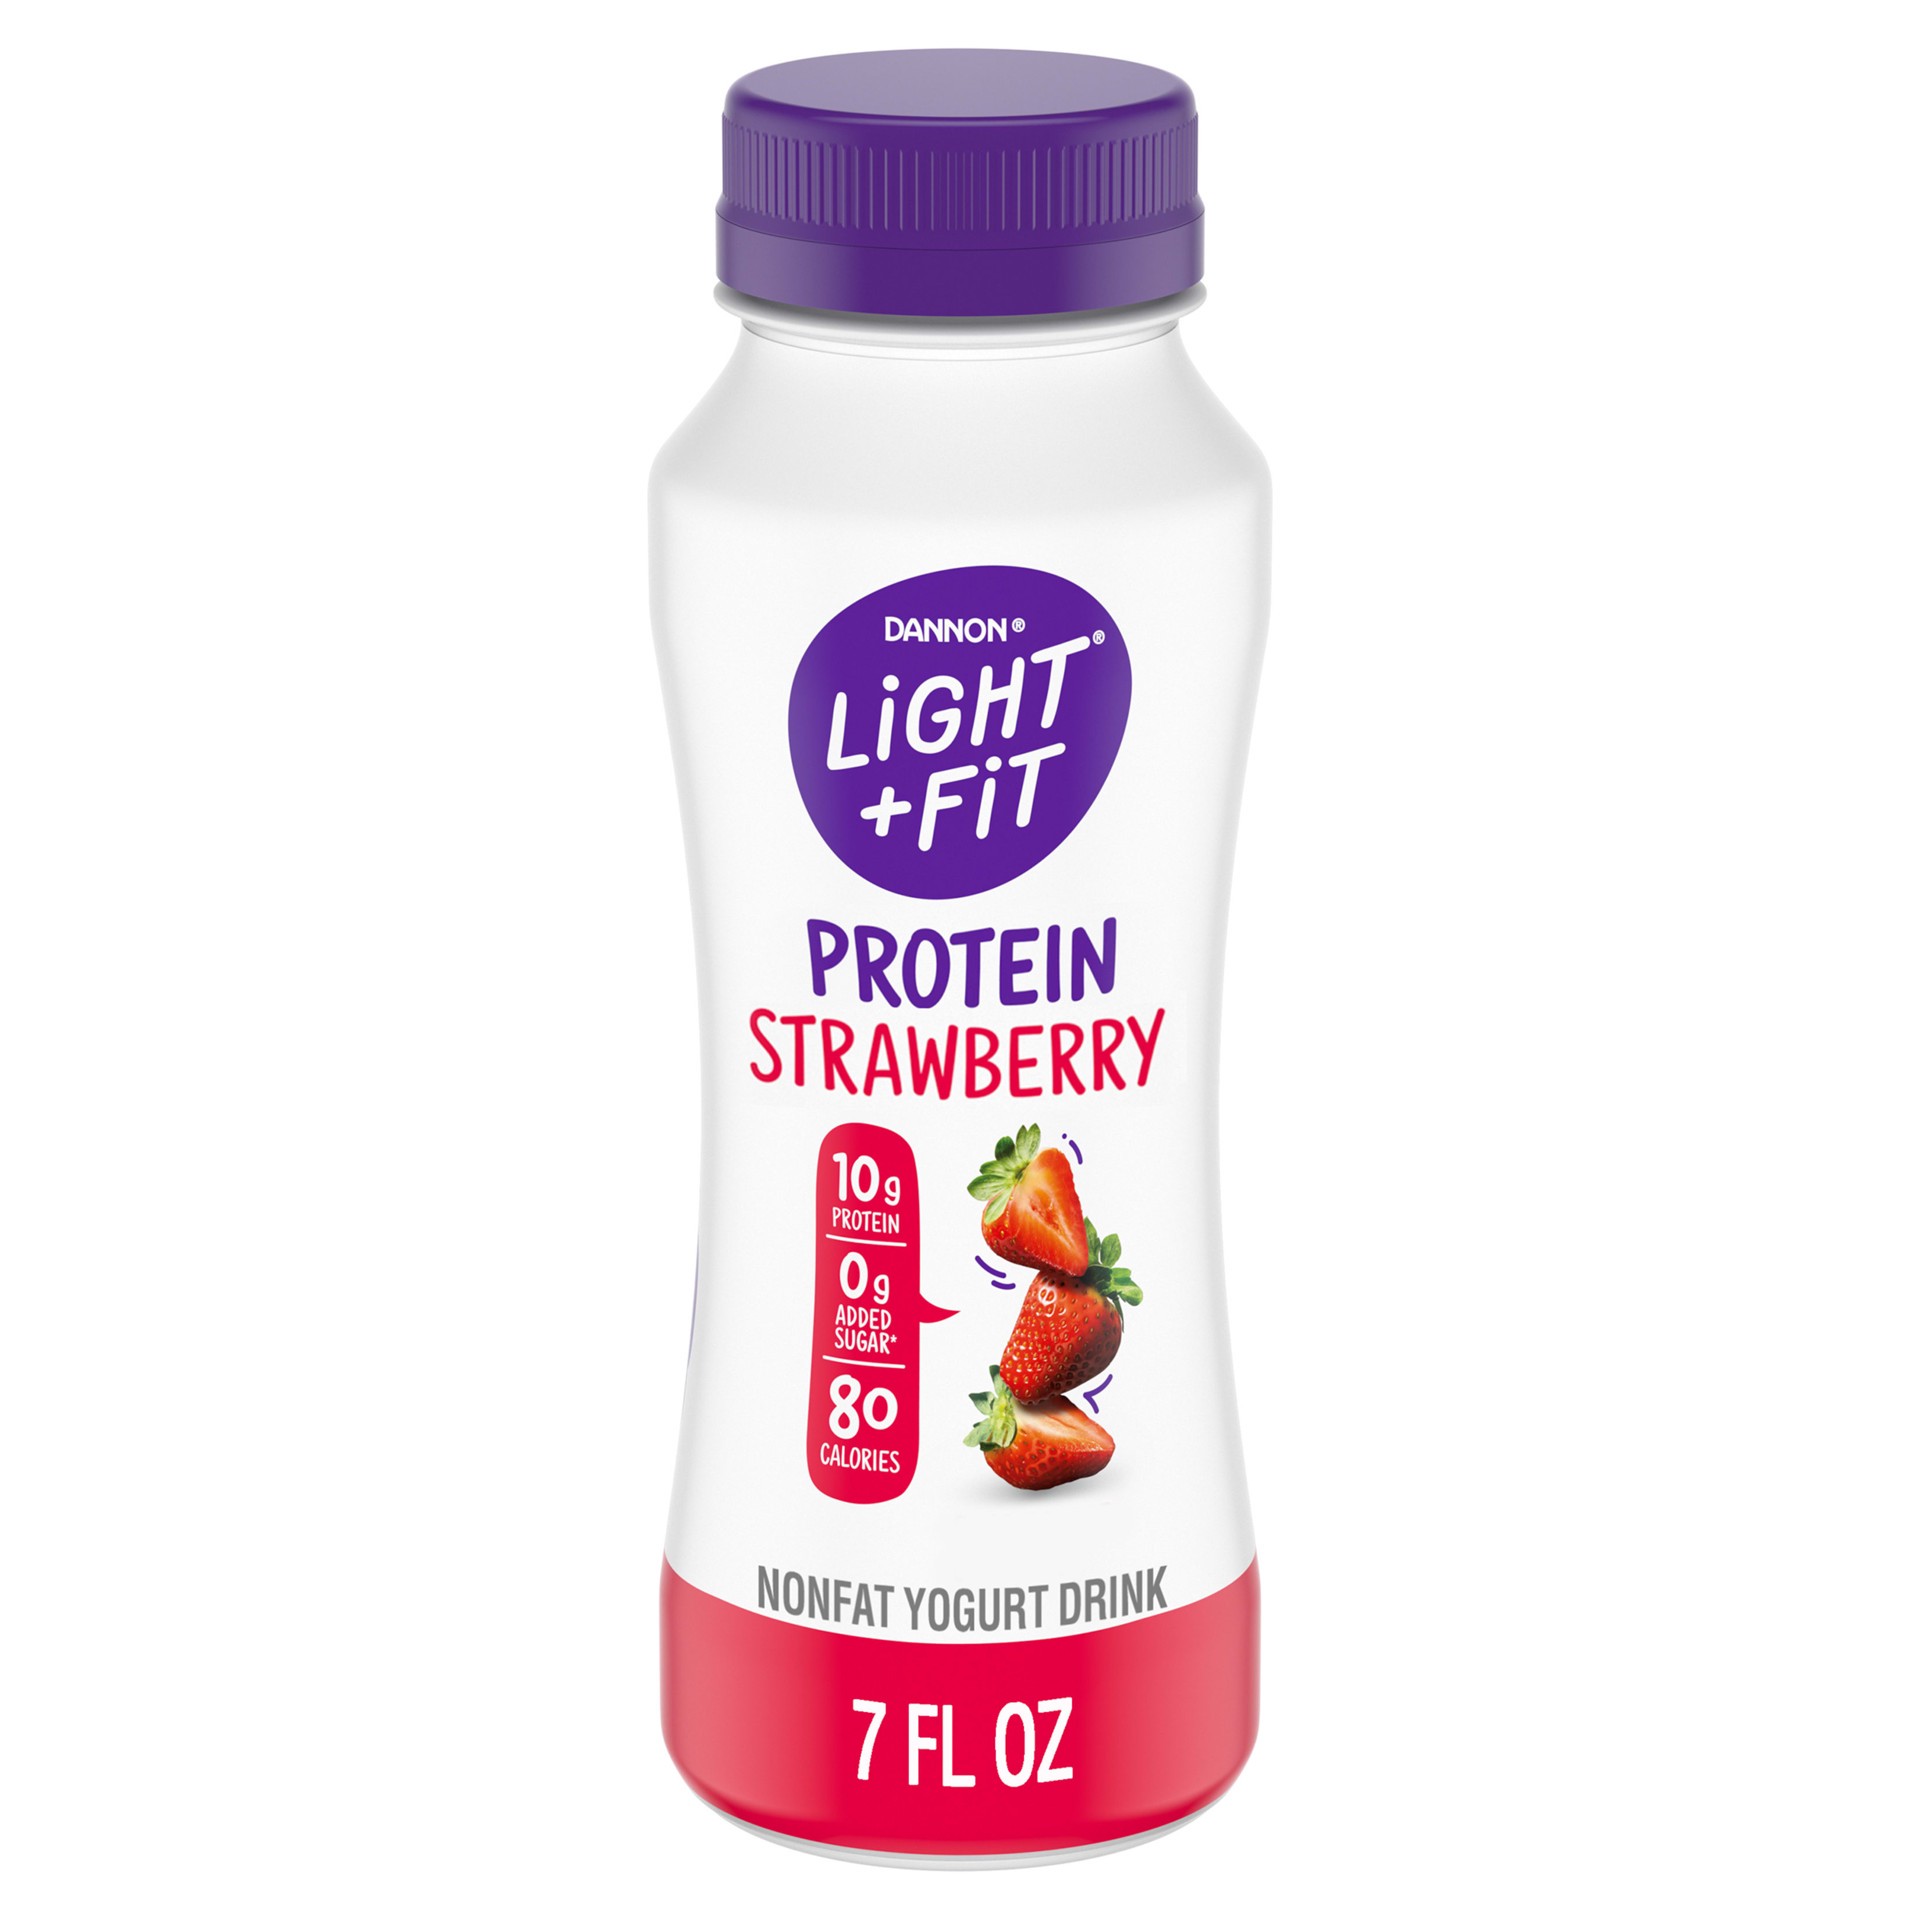 slide 4 of 14, Light + Fit Dannon Light + Fit Nonfat Yogurt Drink Protein Smoothie, Strawberry, 0g Added Sugar*, 7 oz., 7 fl oz